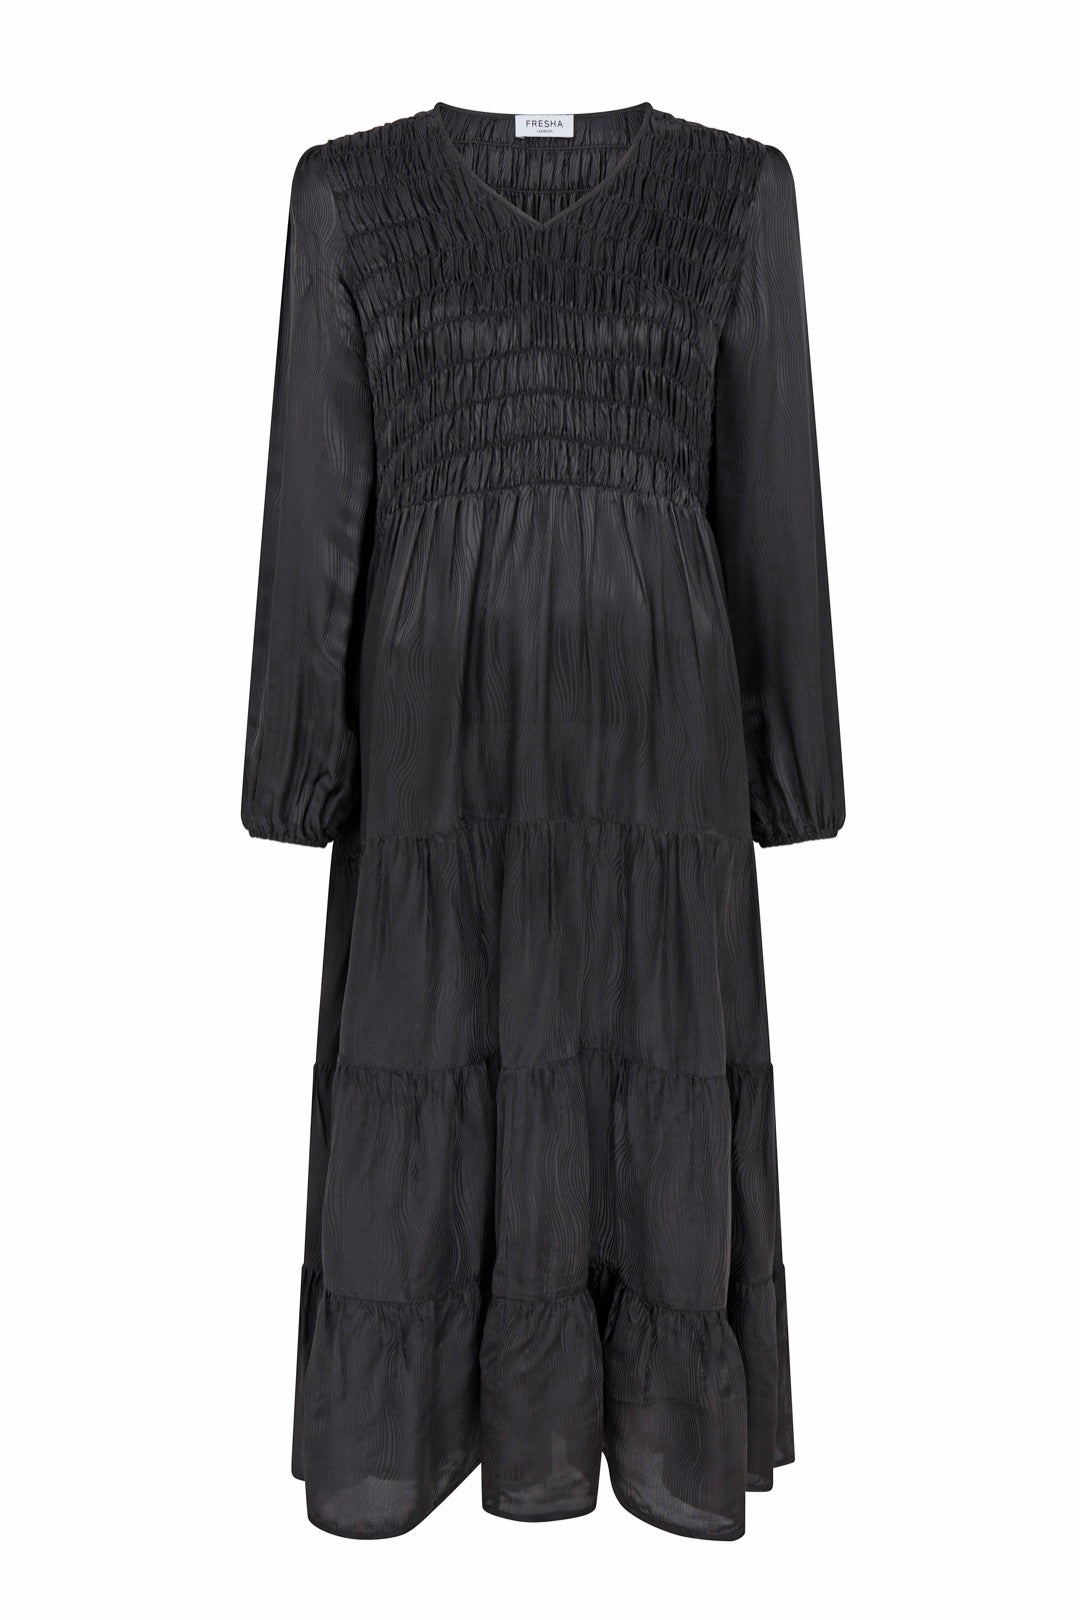 Fresha London Women's Shirred Tiered Dress Black Zebra